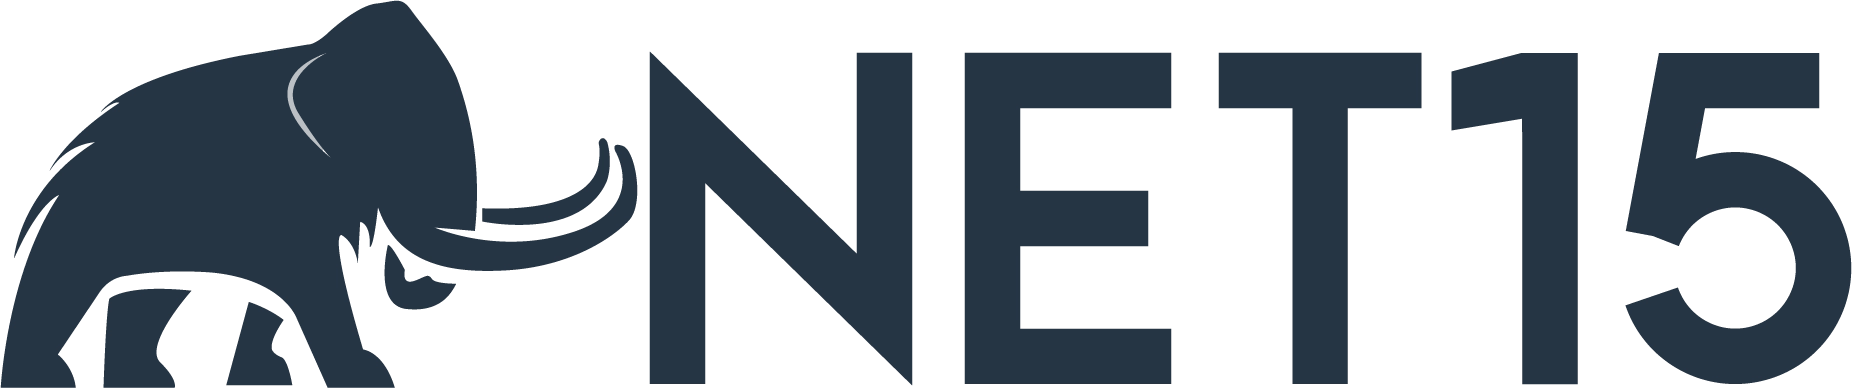 logo de Net15